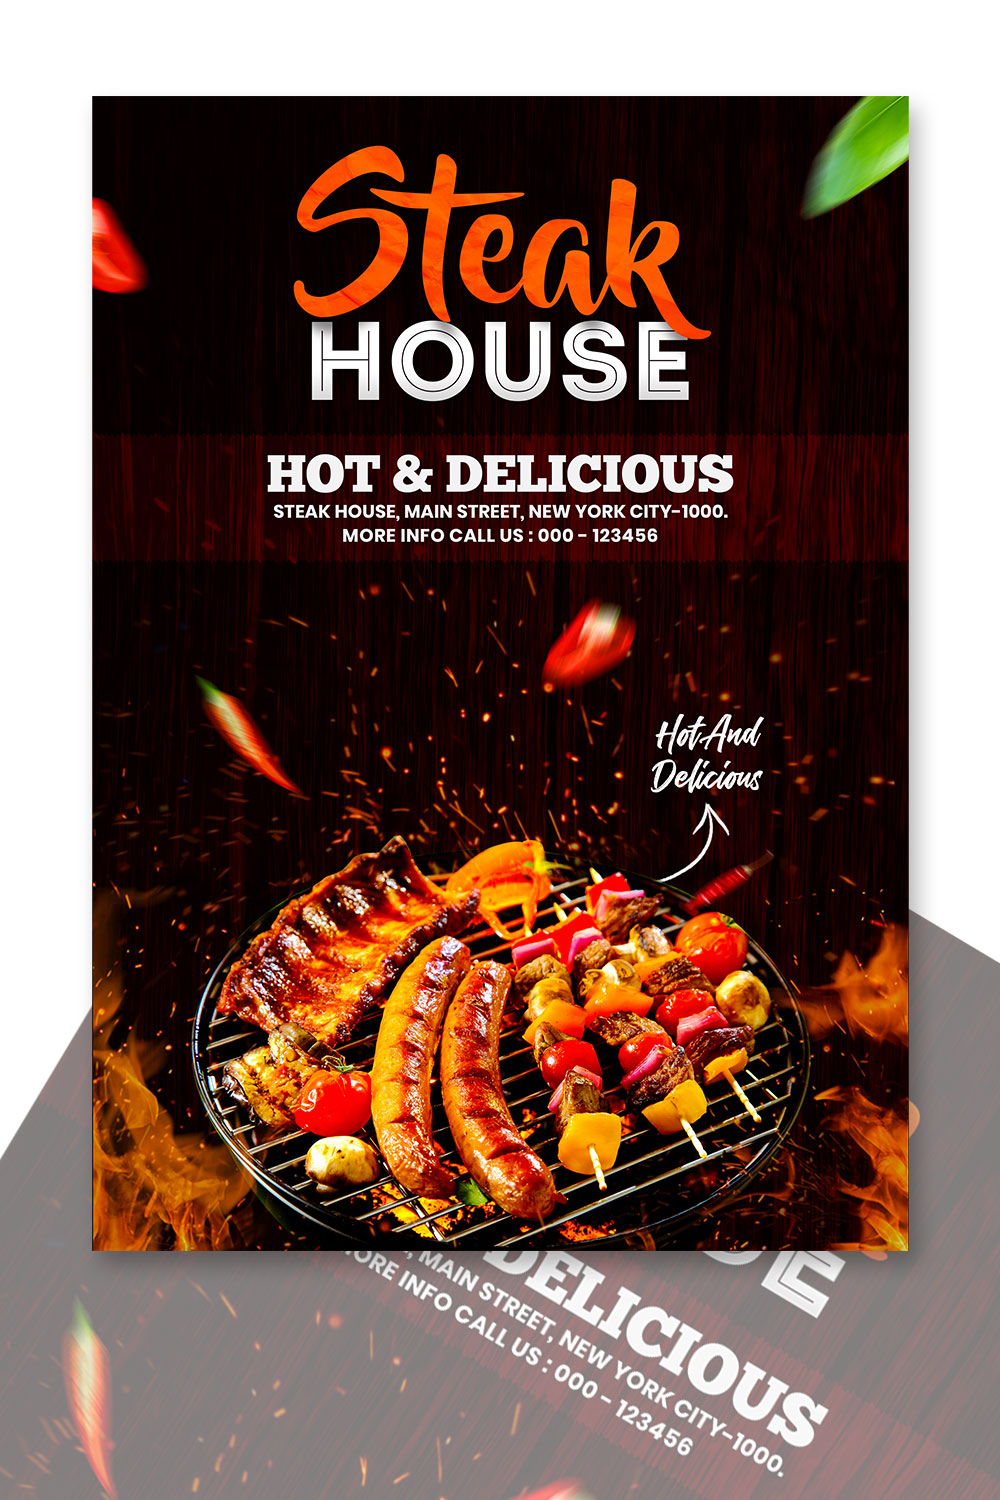 Grilled steak house restaurant flyer template pinterest preview image.